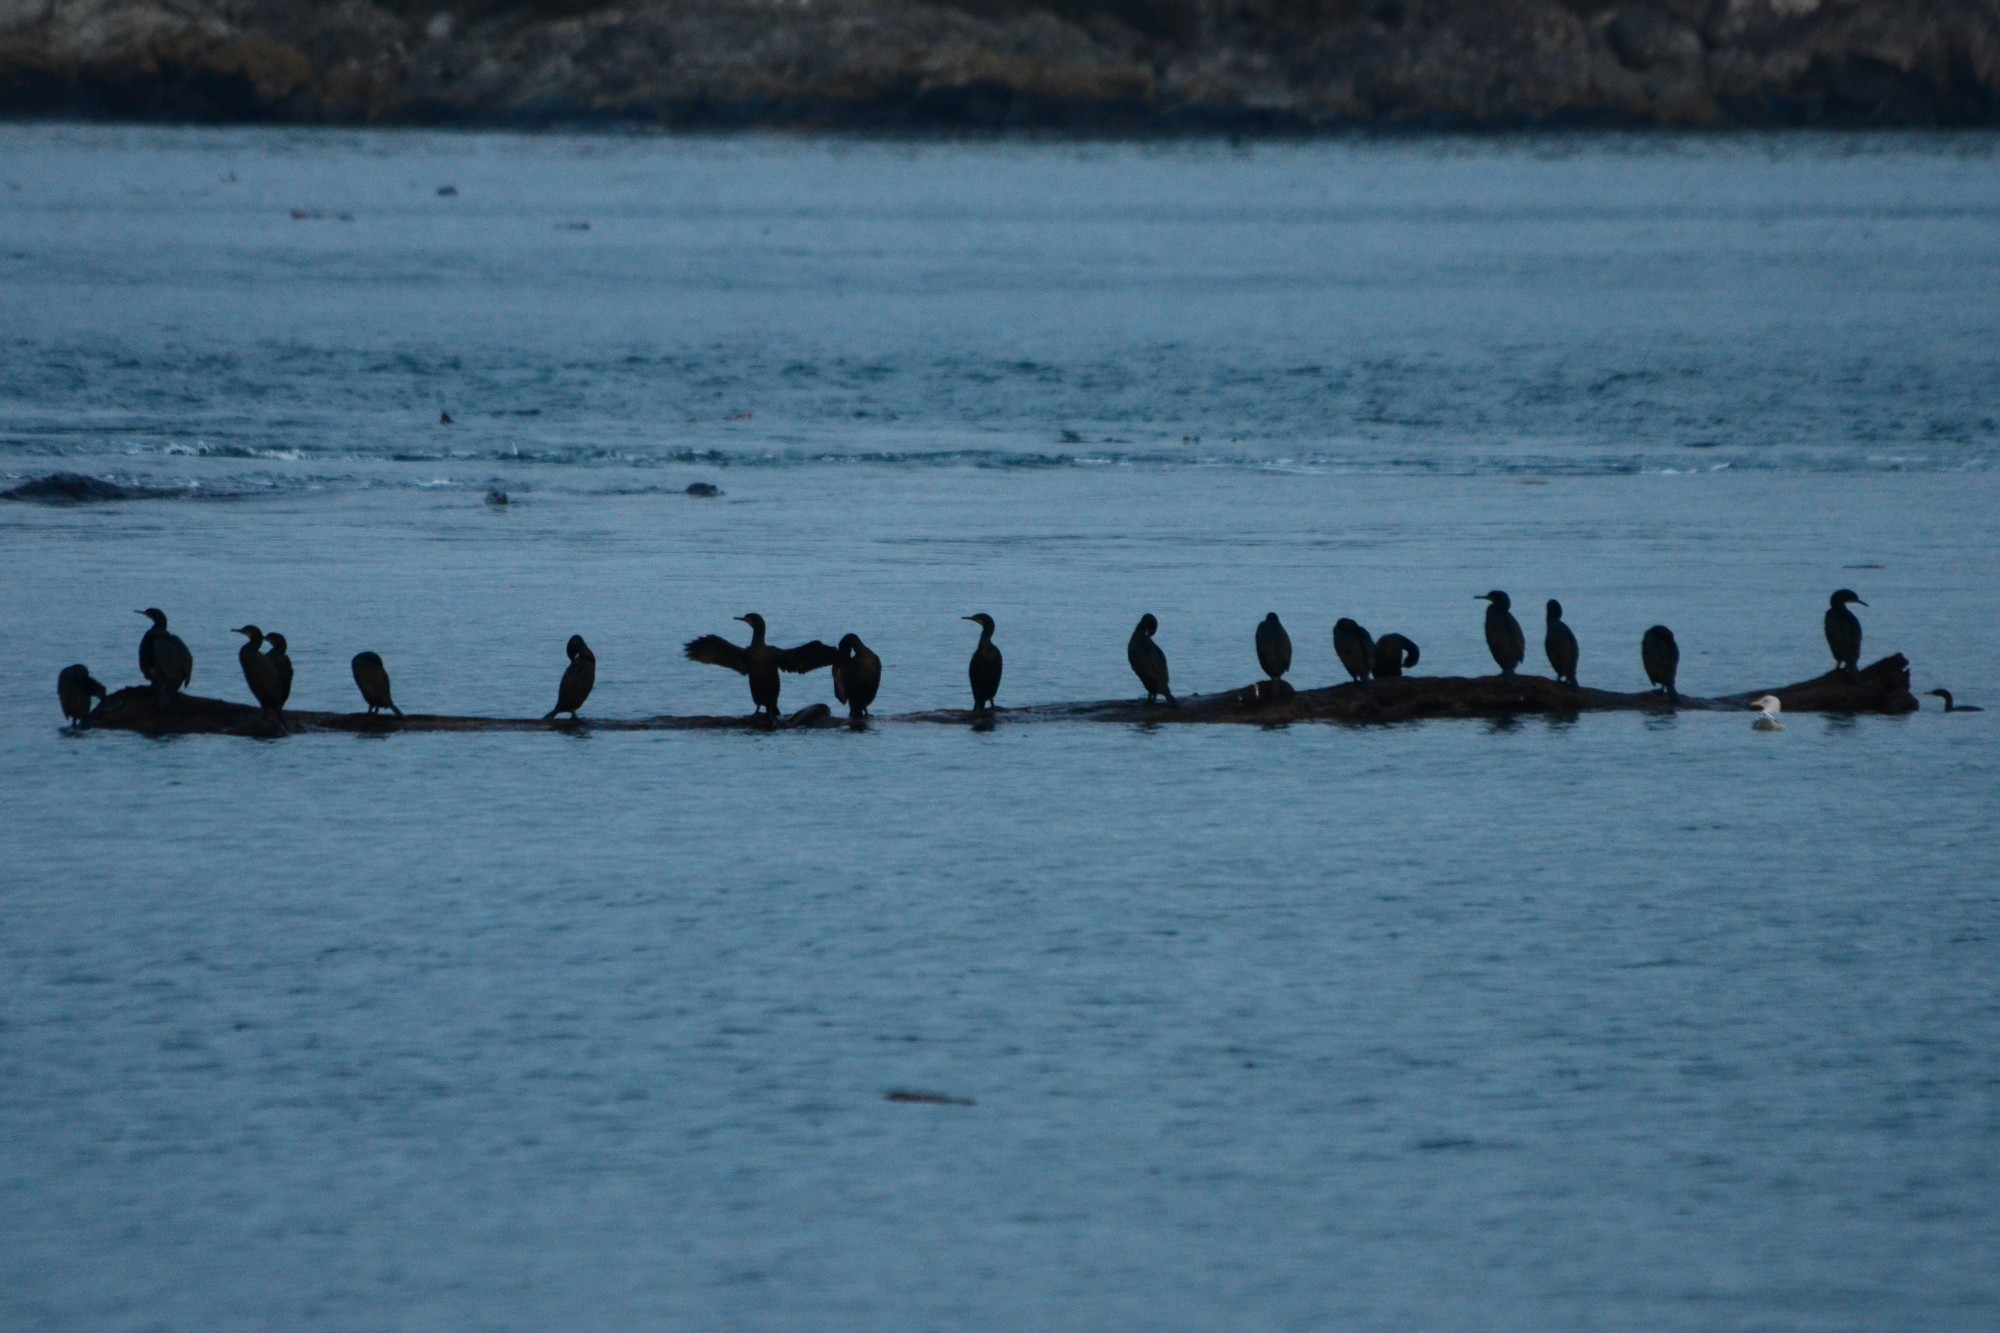 Cormorants taking a rest on some drift wood